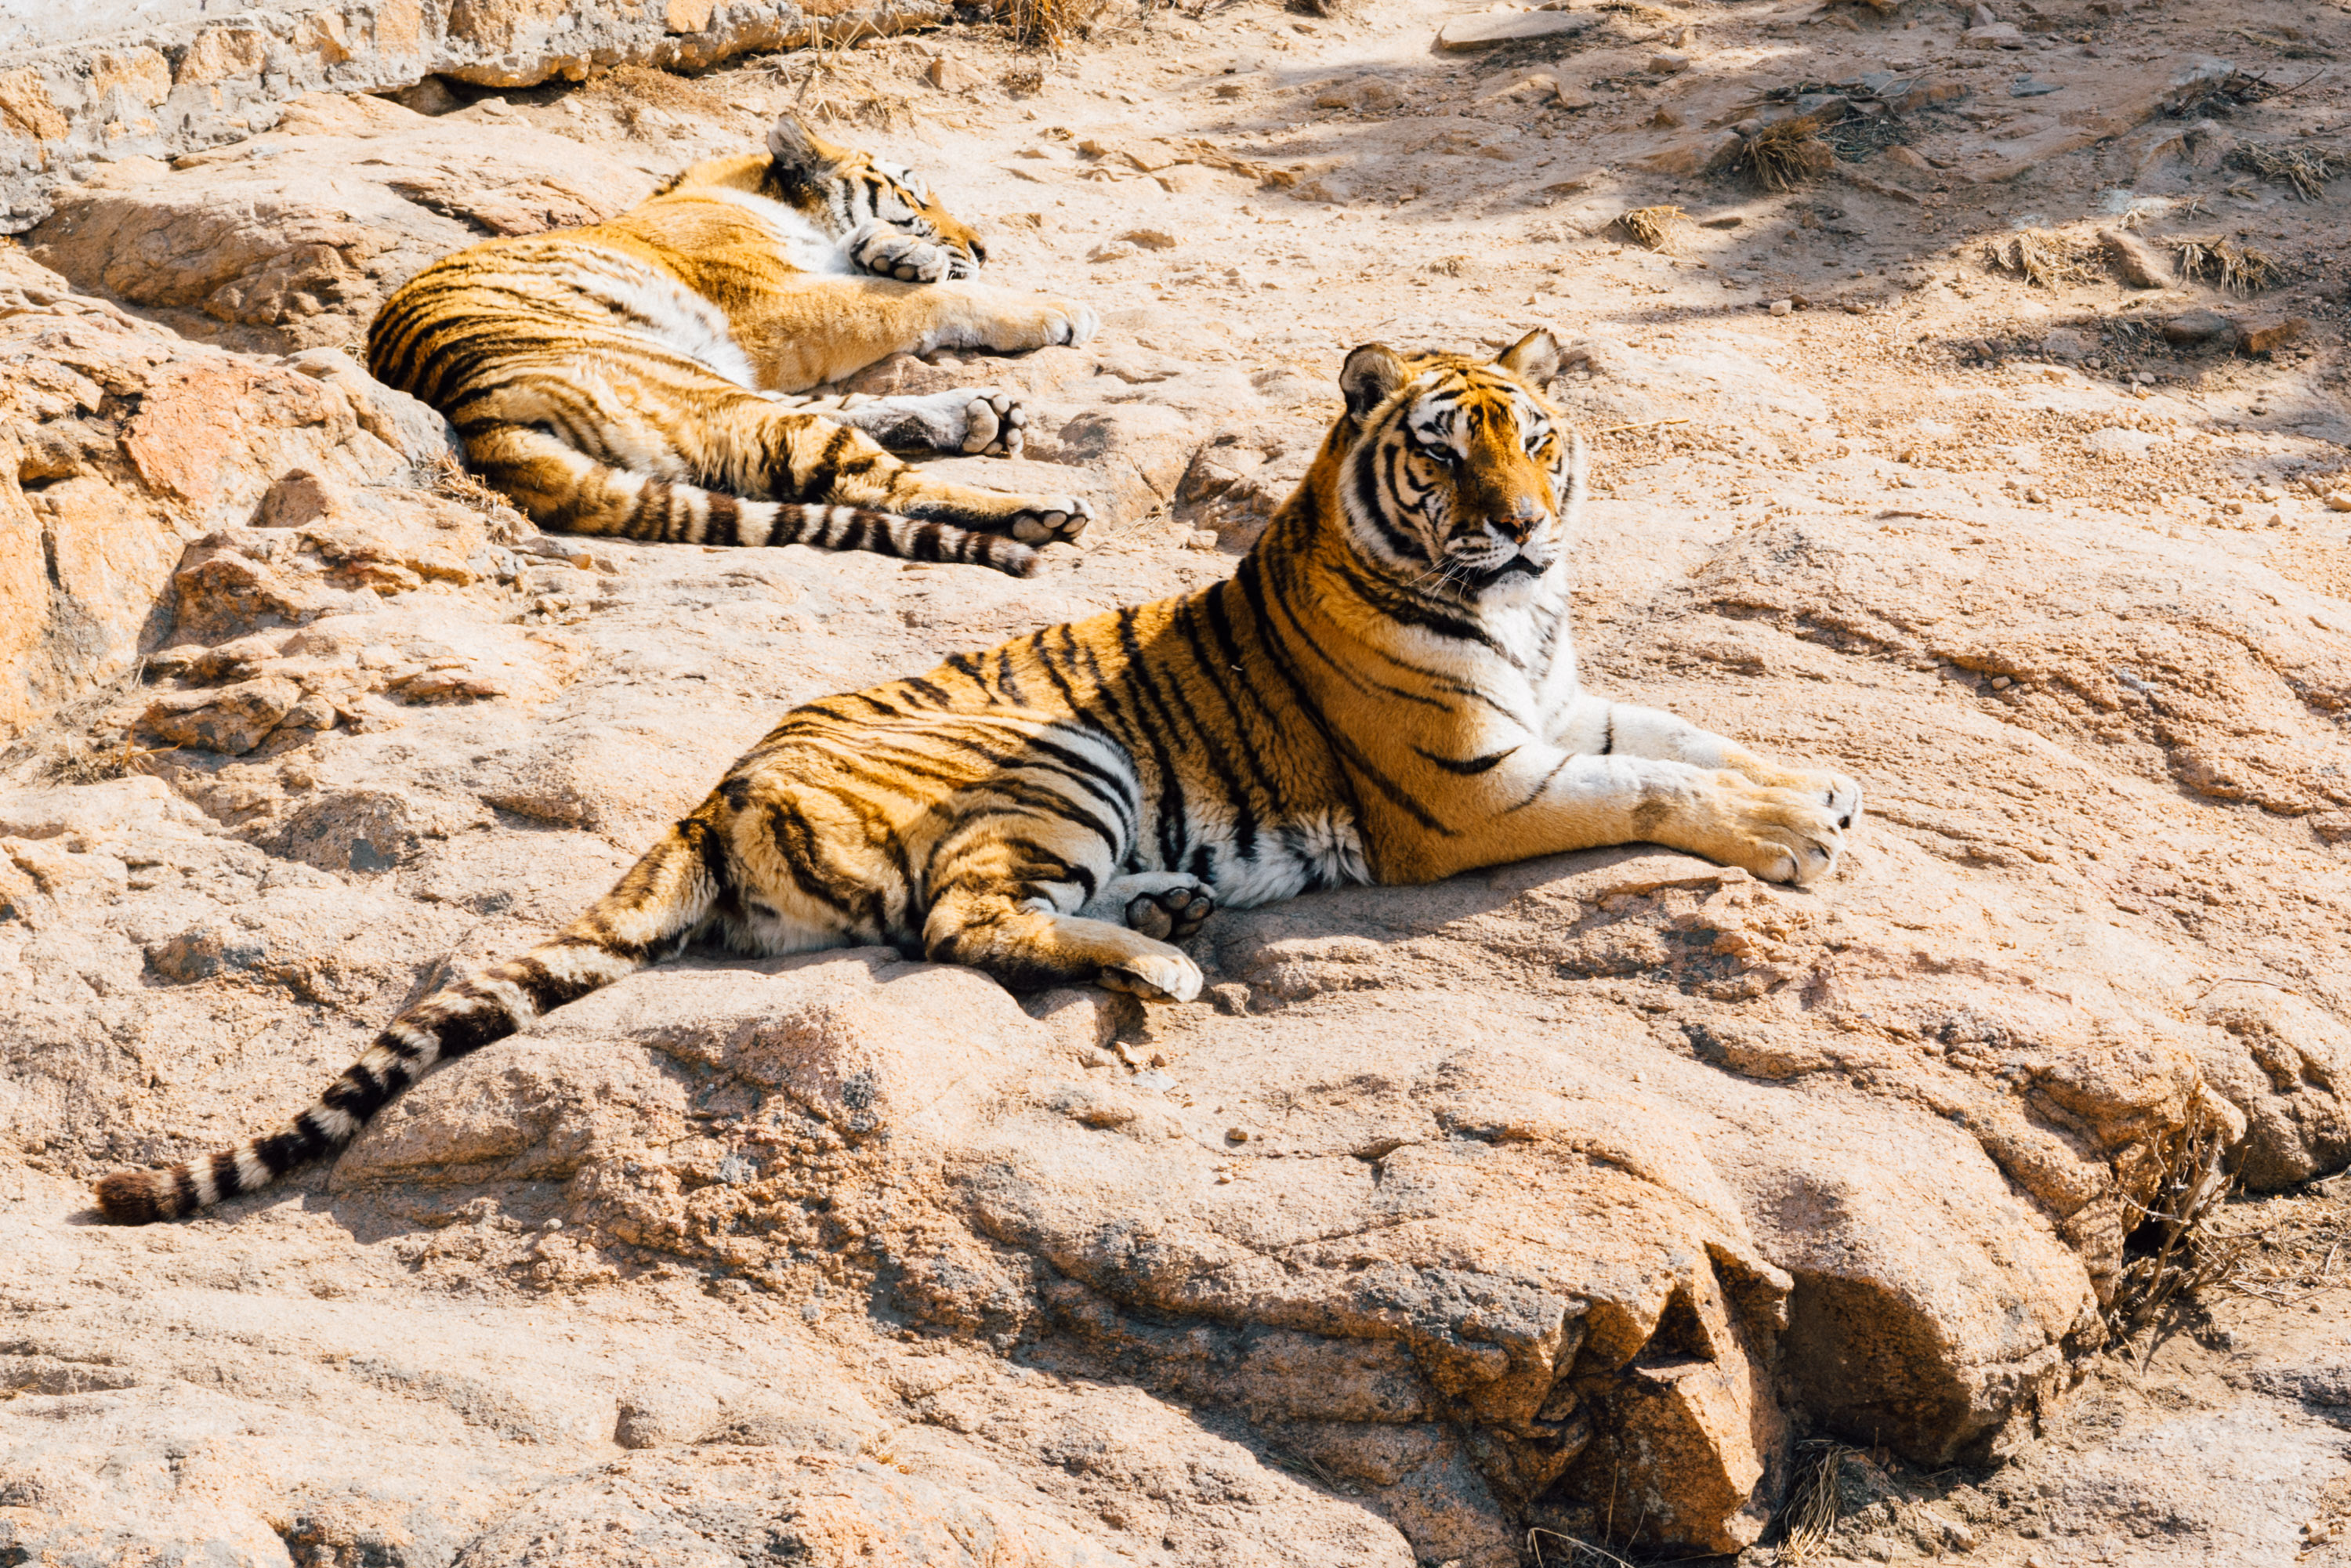 two tiger animal lying on ground during daytime